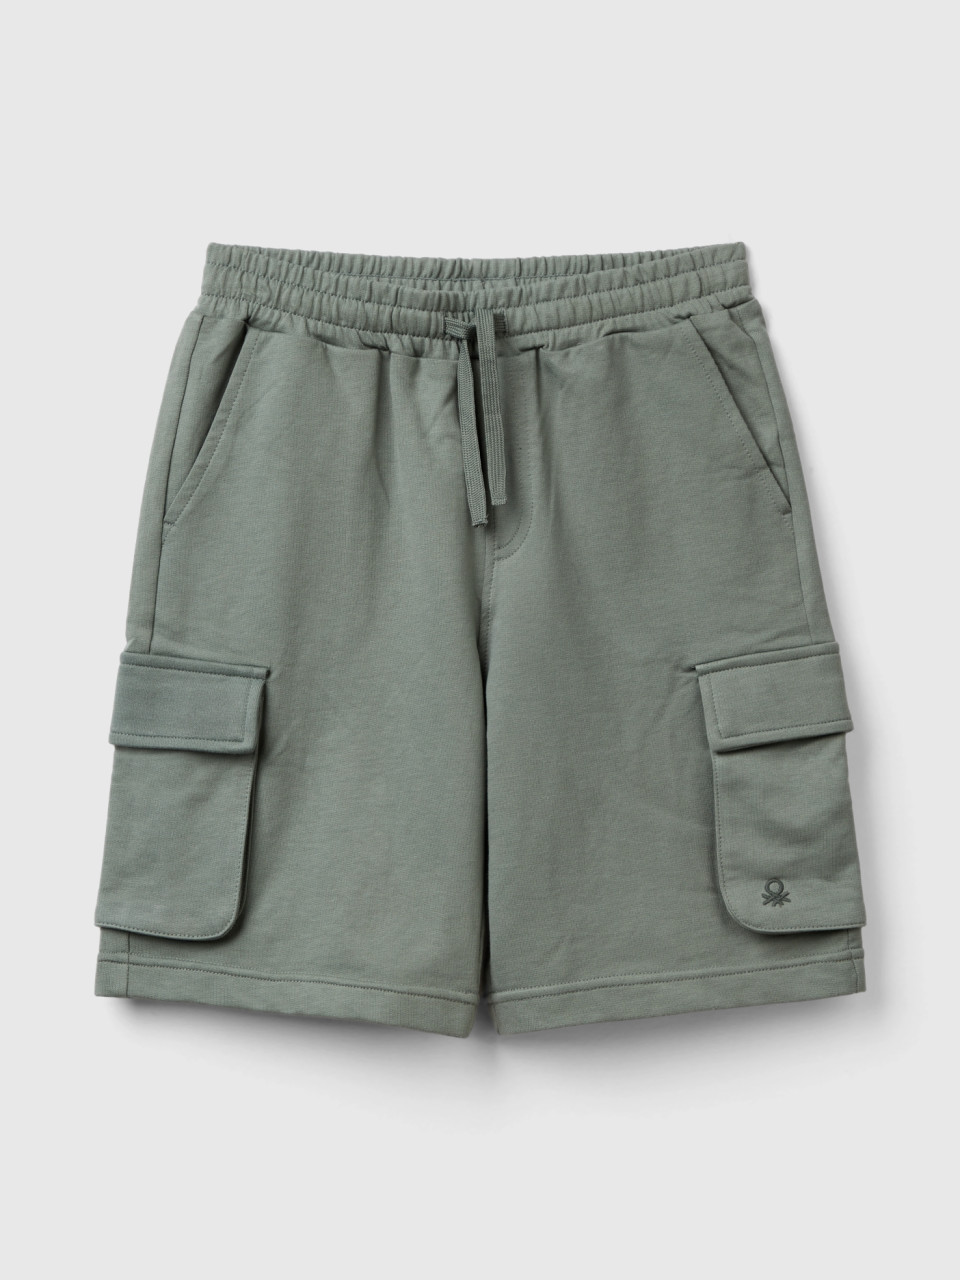 Benetton, Cargo Shorts In Light Sweat Fabric, Military Green, Kids